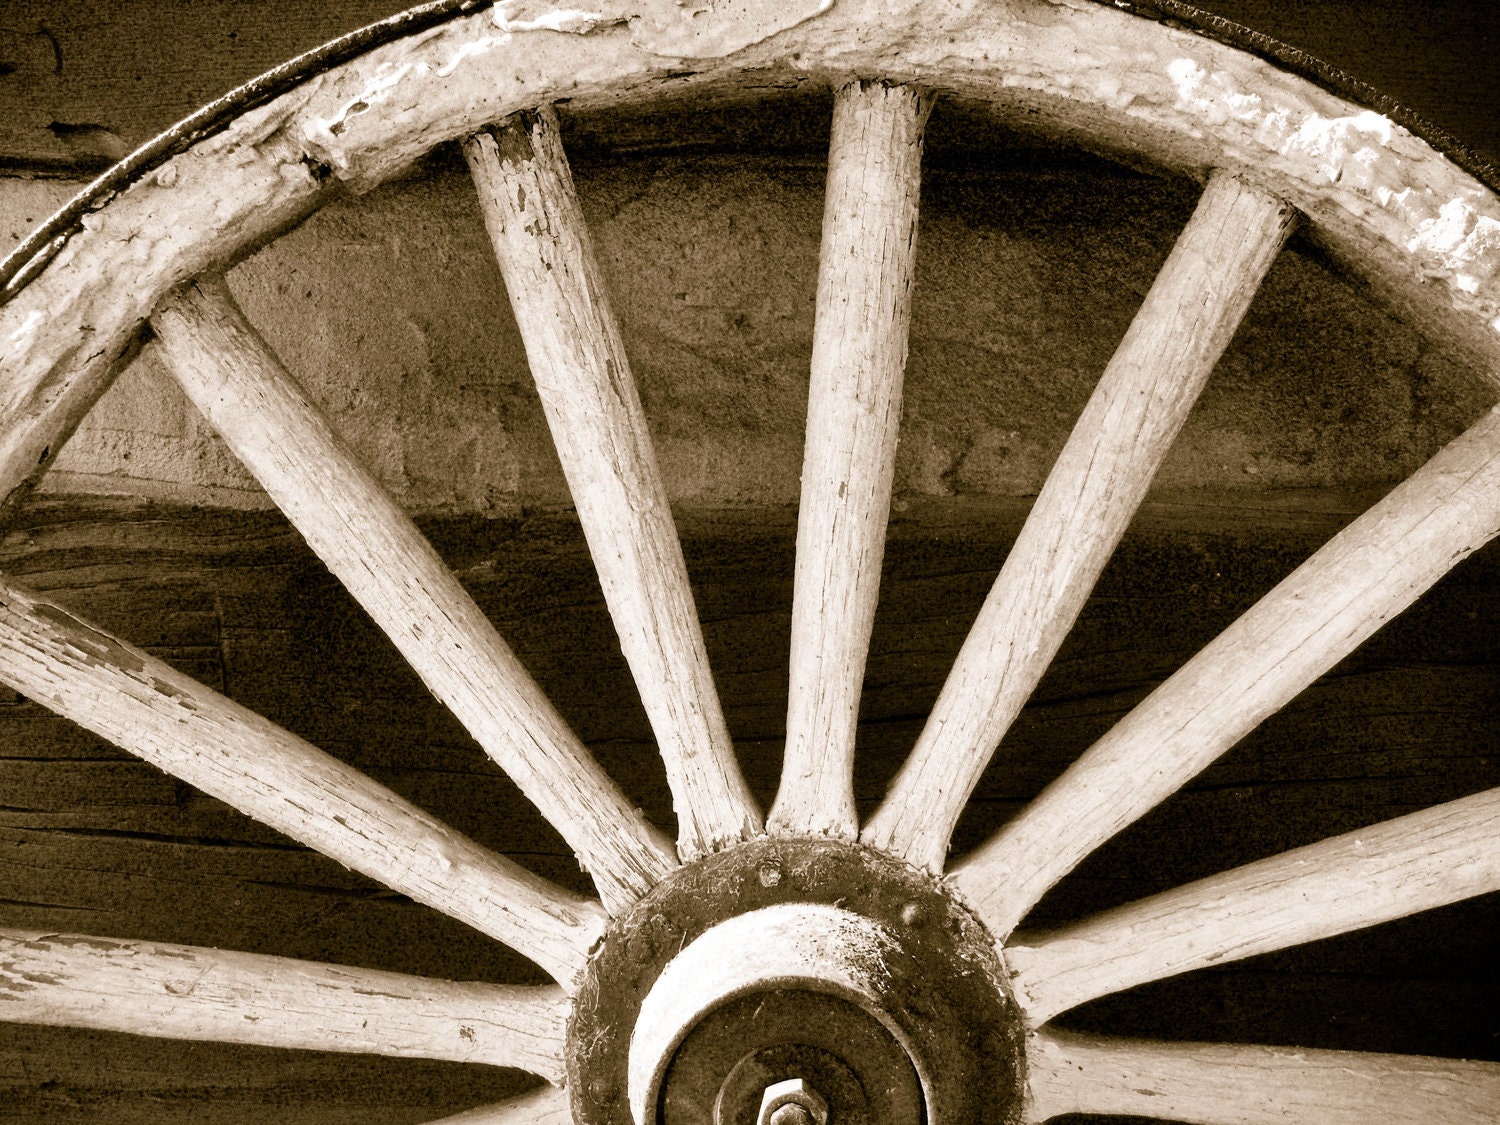 Rustic Wagon Wheel Photograph -  8 x 10 inch - TheHeartWithin